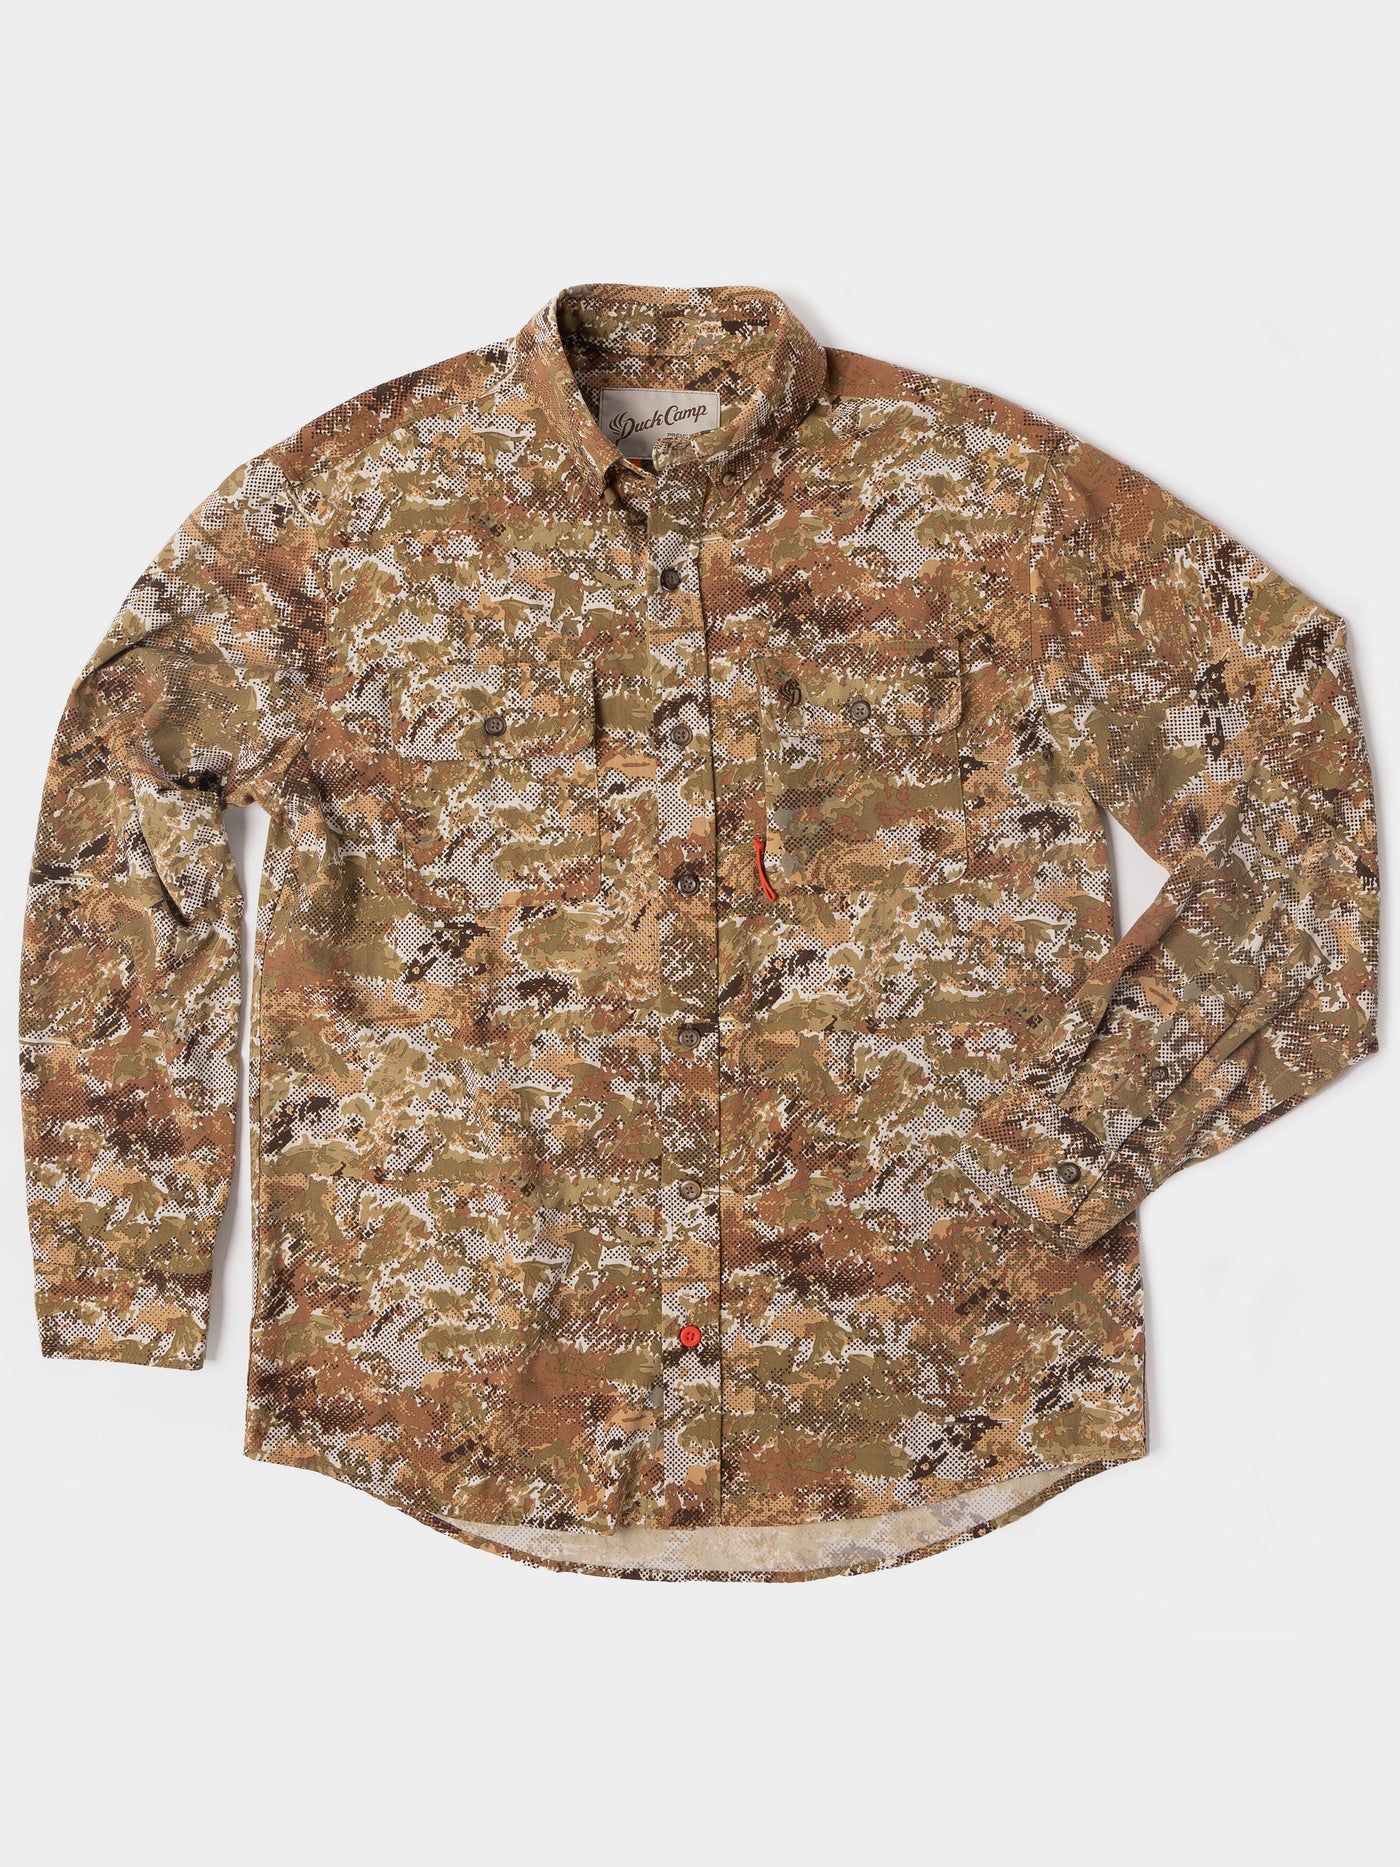 Duck Camp Lightweight Hunting Shirt Long Sleeve, Midland 2.0 | XL